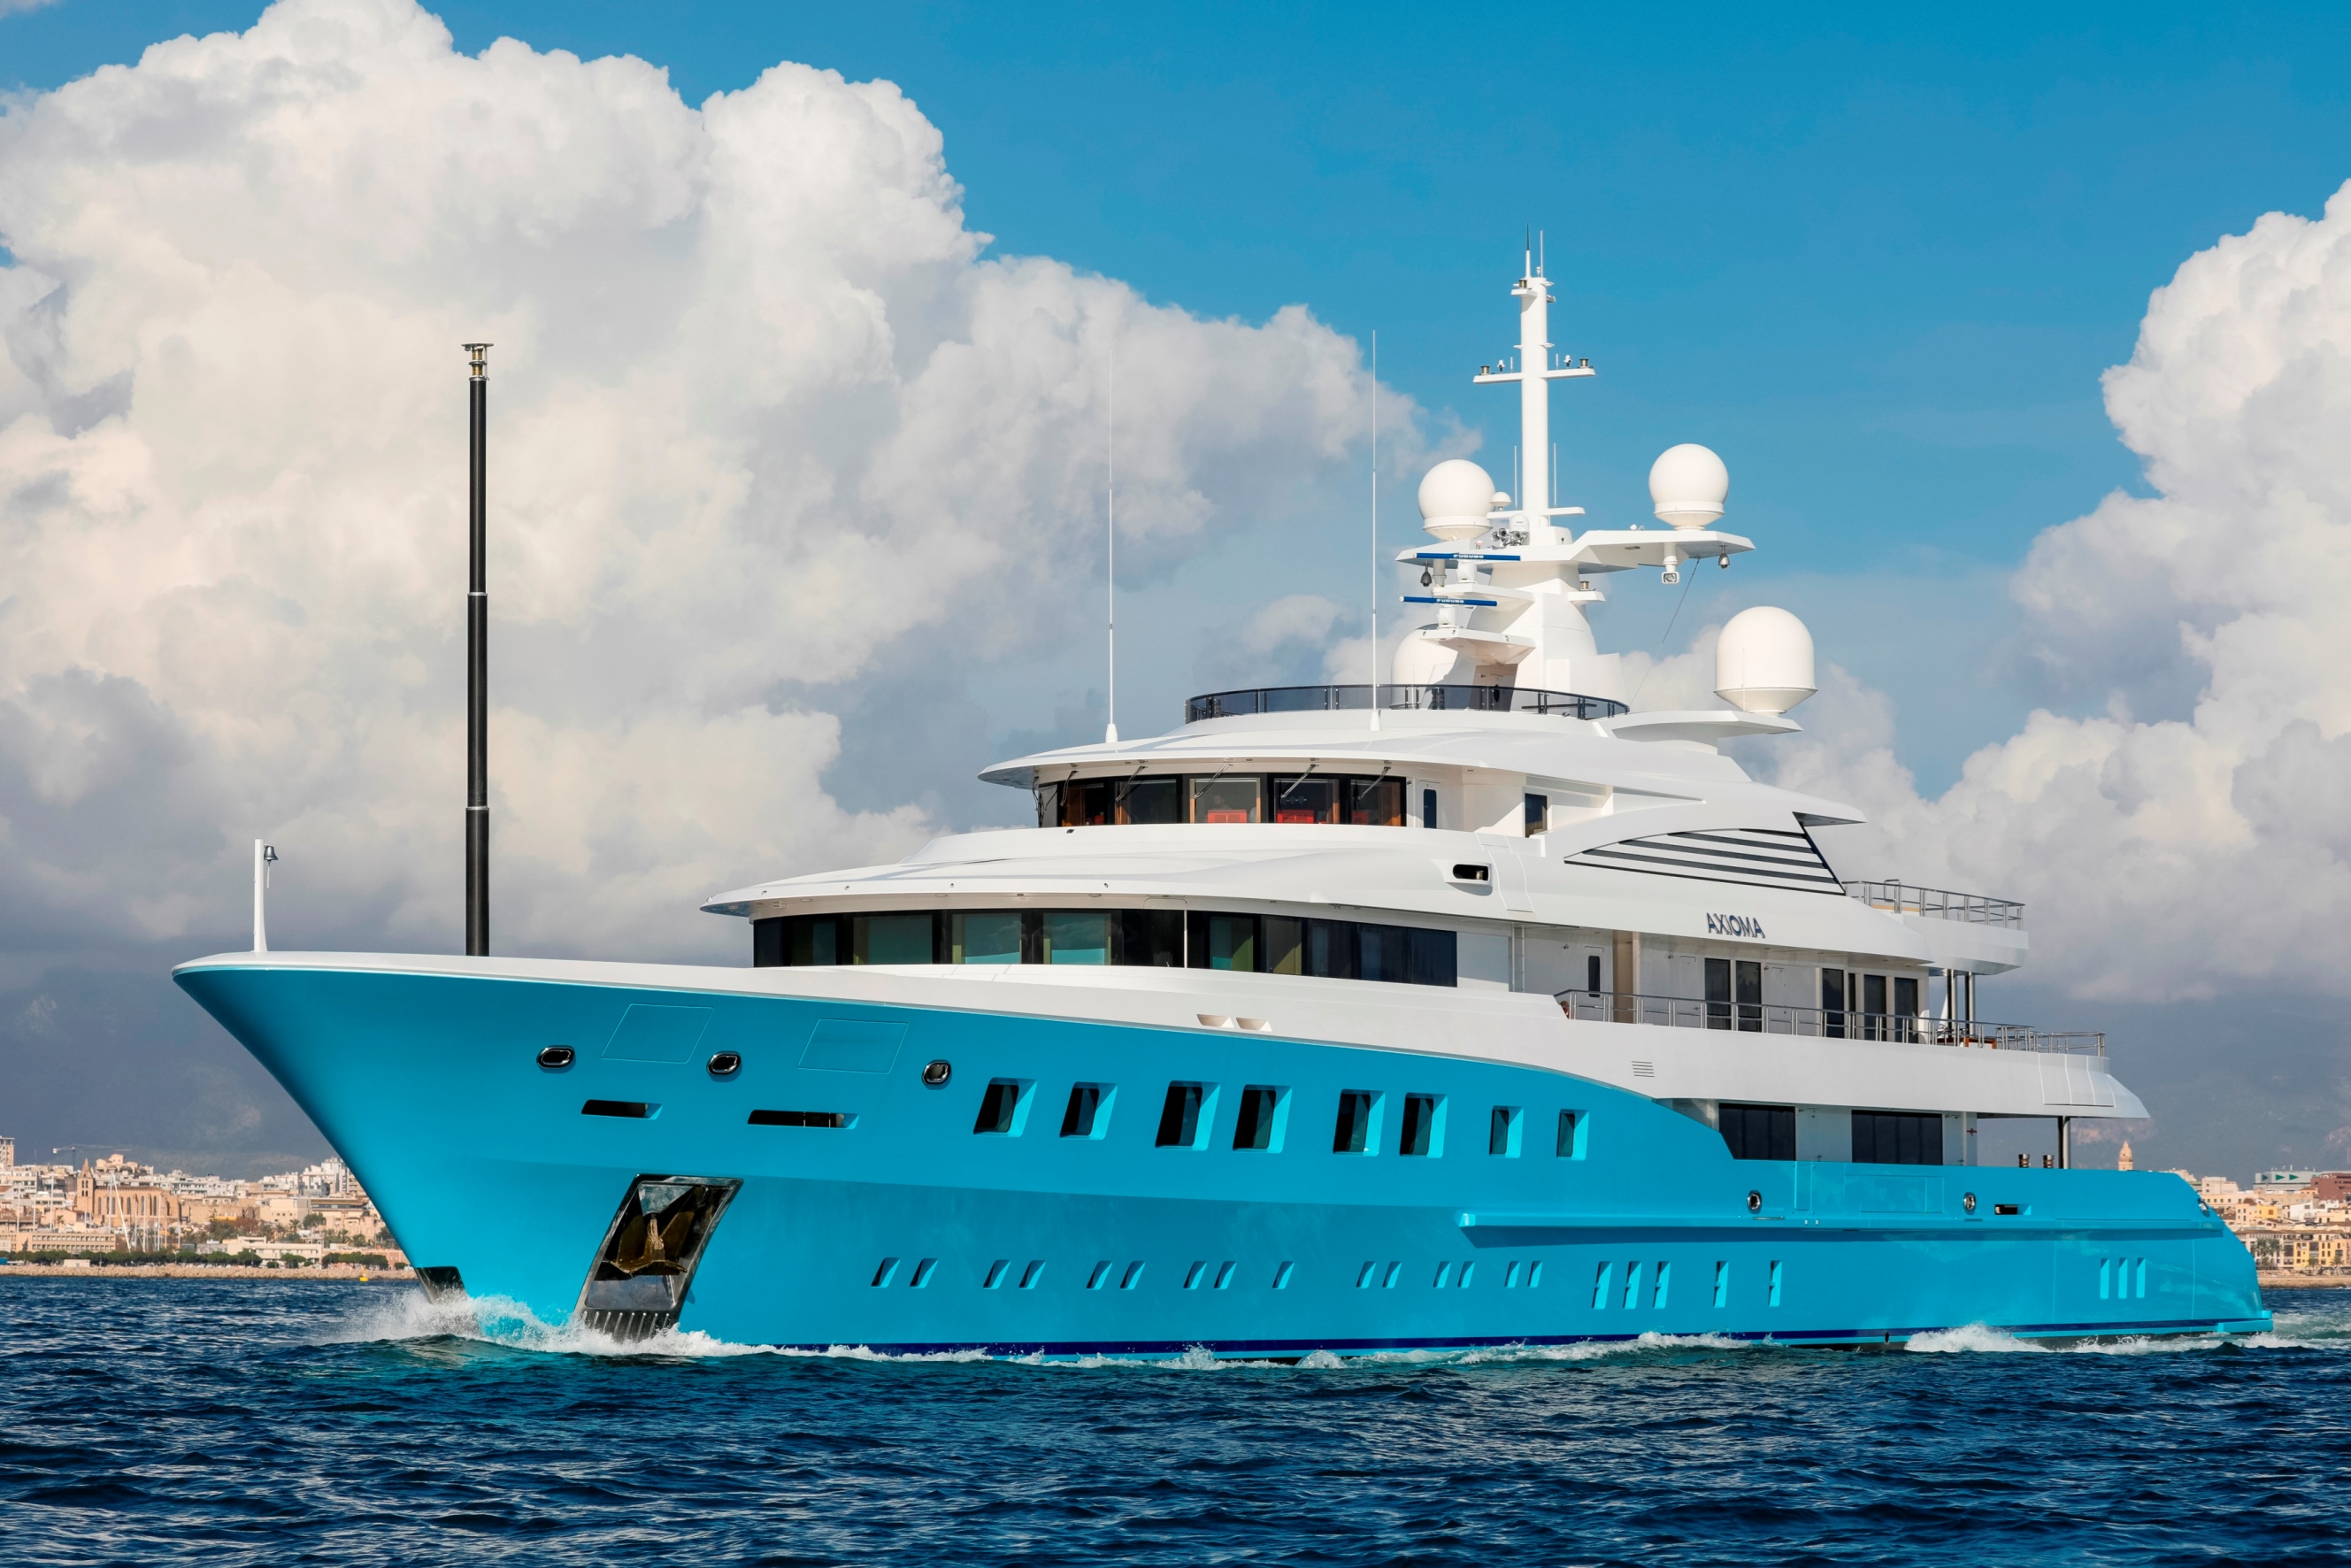 axioma yacht who owns it